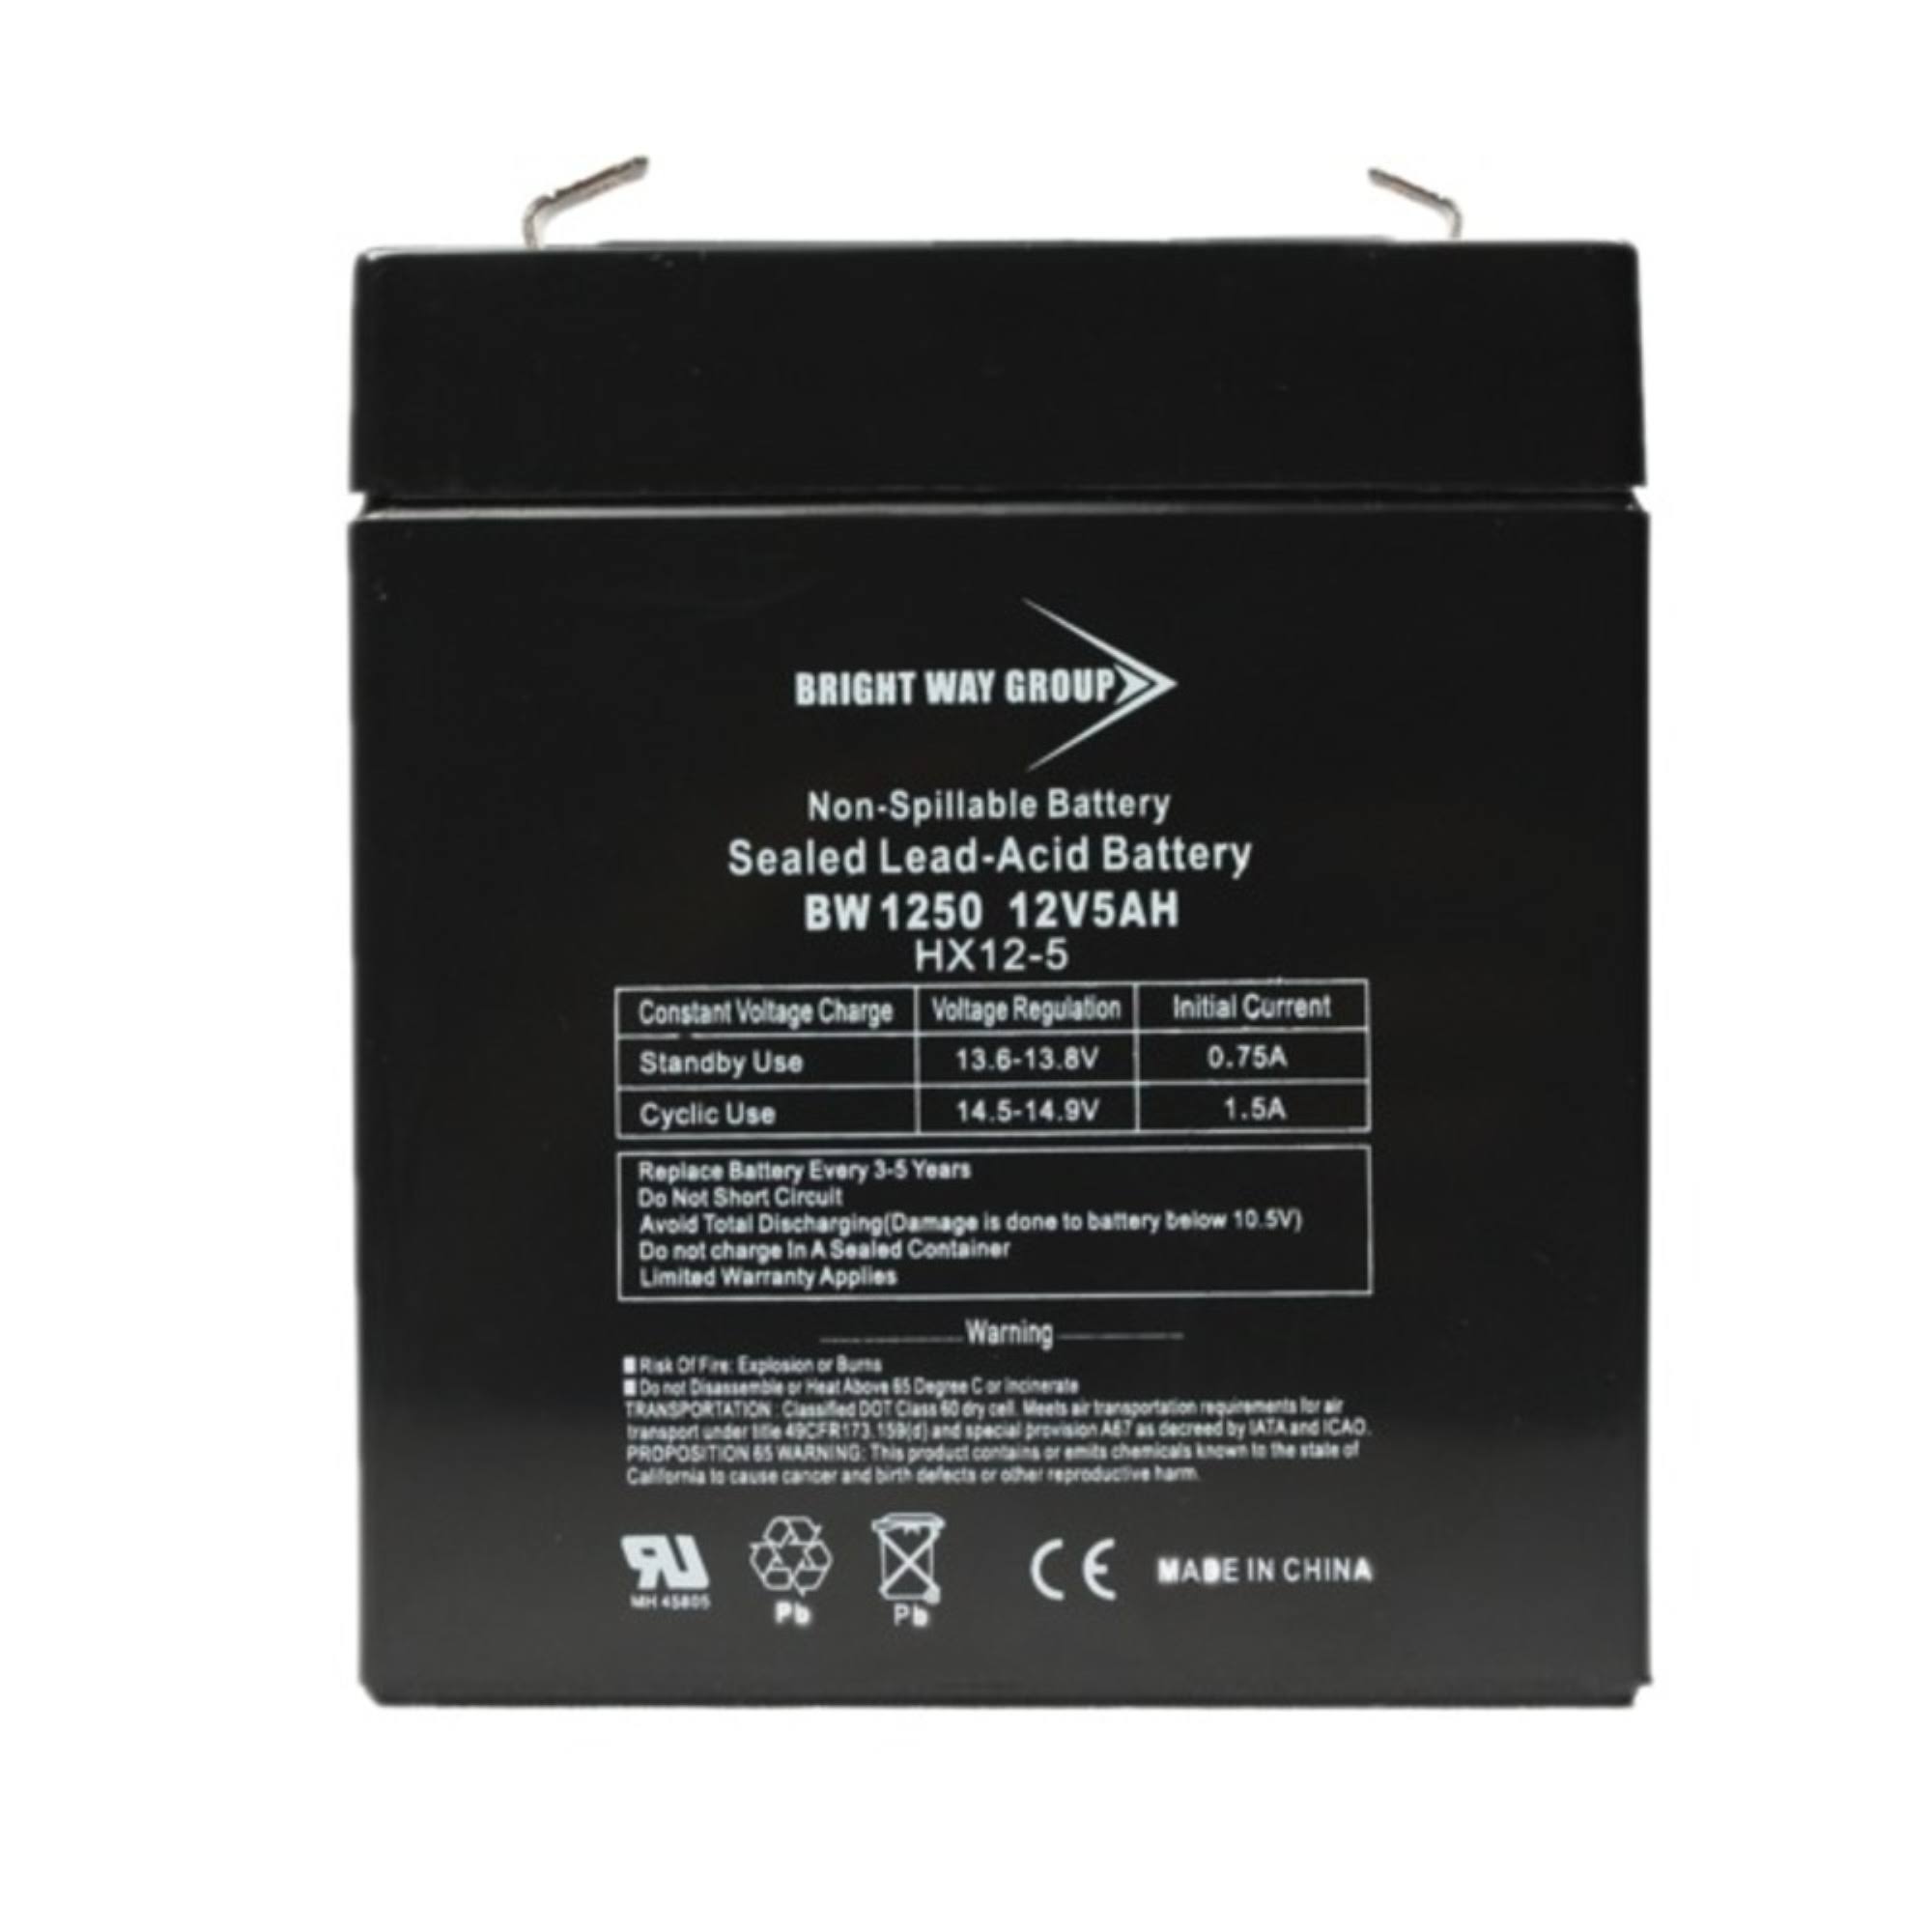 Bright Way Group BW 1250 F1 (0124) 12 Volt 5 Ah Battery